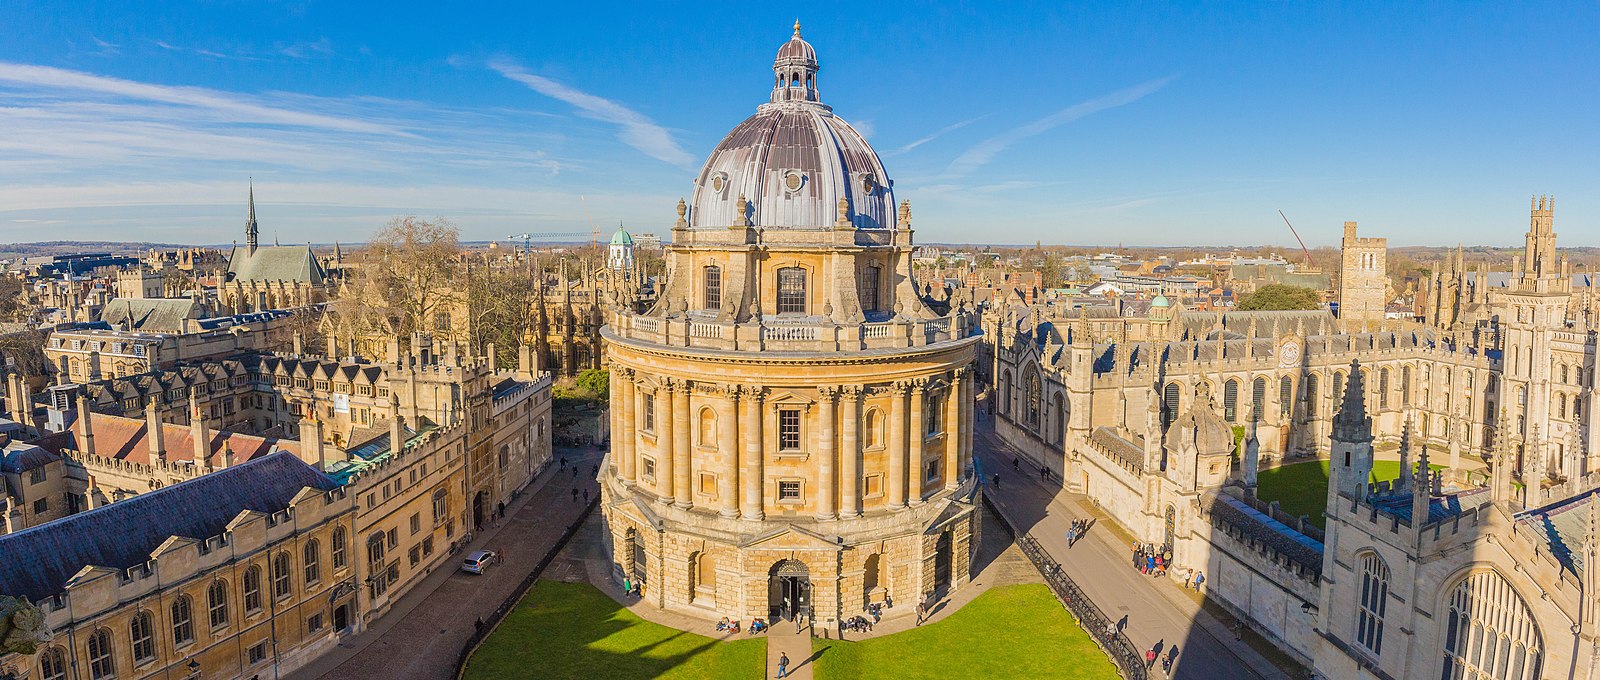 Radcliffe Camera University of Oxford